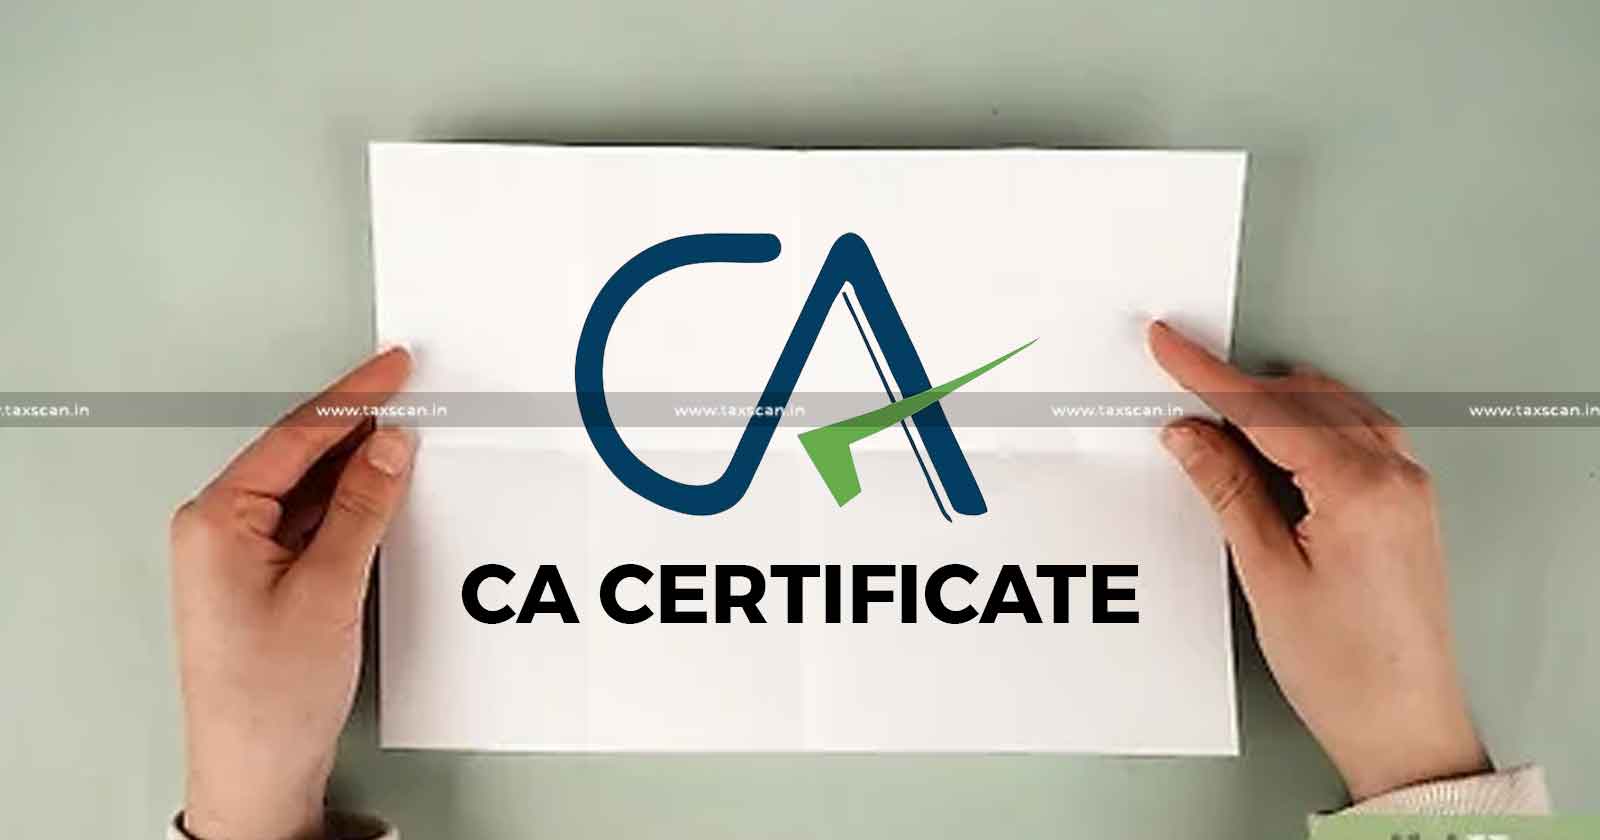 Customs Duty Demand - Special Additional Duty - Proper Examination - CA Certificate - CESTAT - Re-adjudication - taxscan